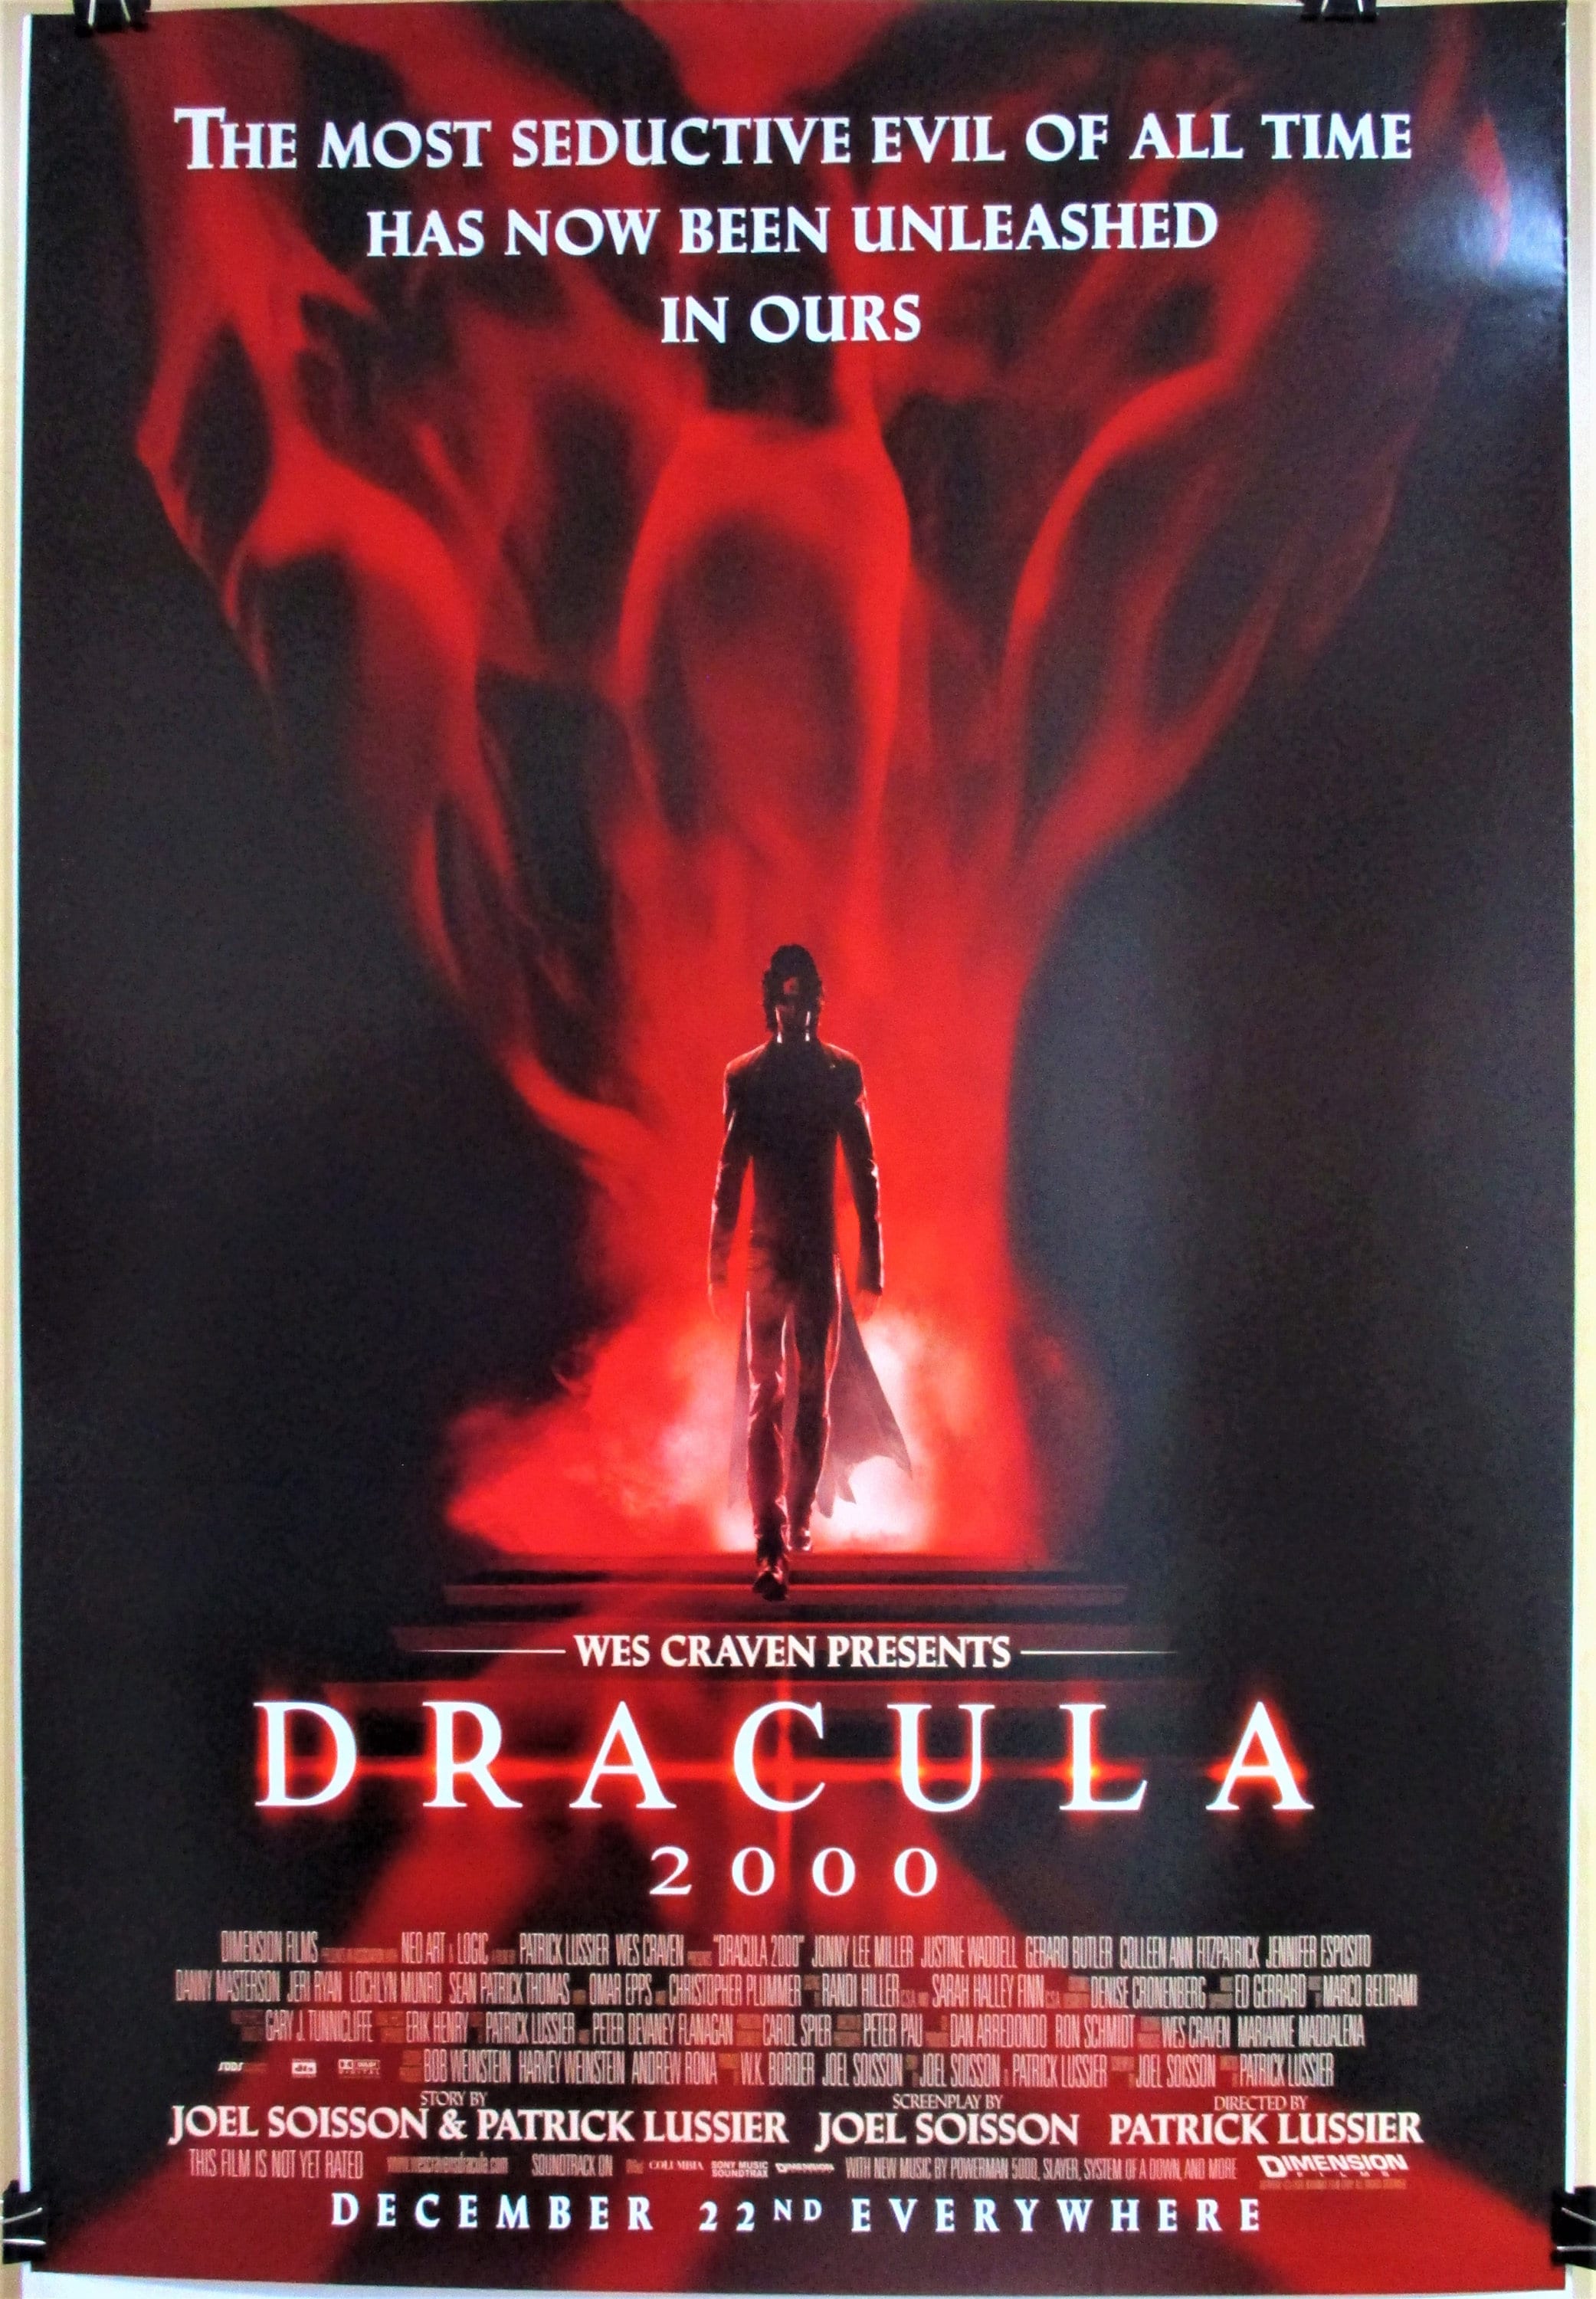 DRACULA 2000, Original One Sheet Movie Poster 27x40, Gerard Butler, Jonny Lee Miller, Justine Waddell, Horror, Man Cave